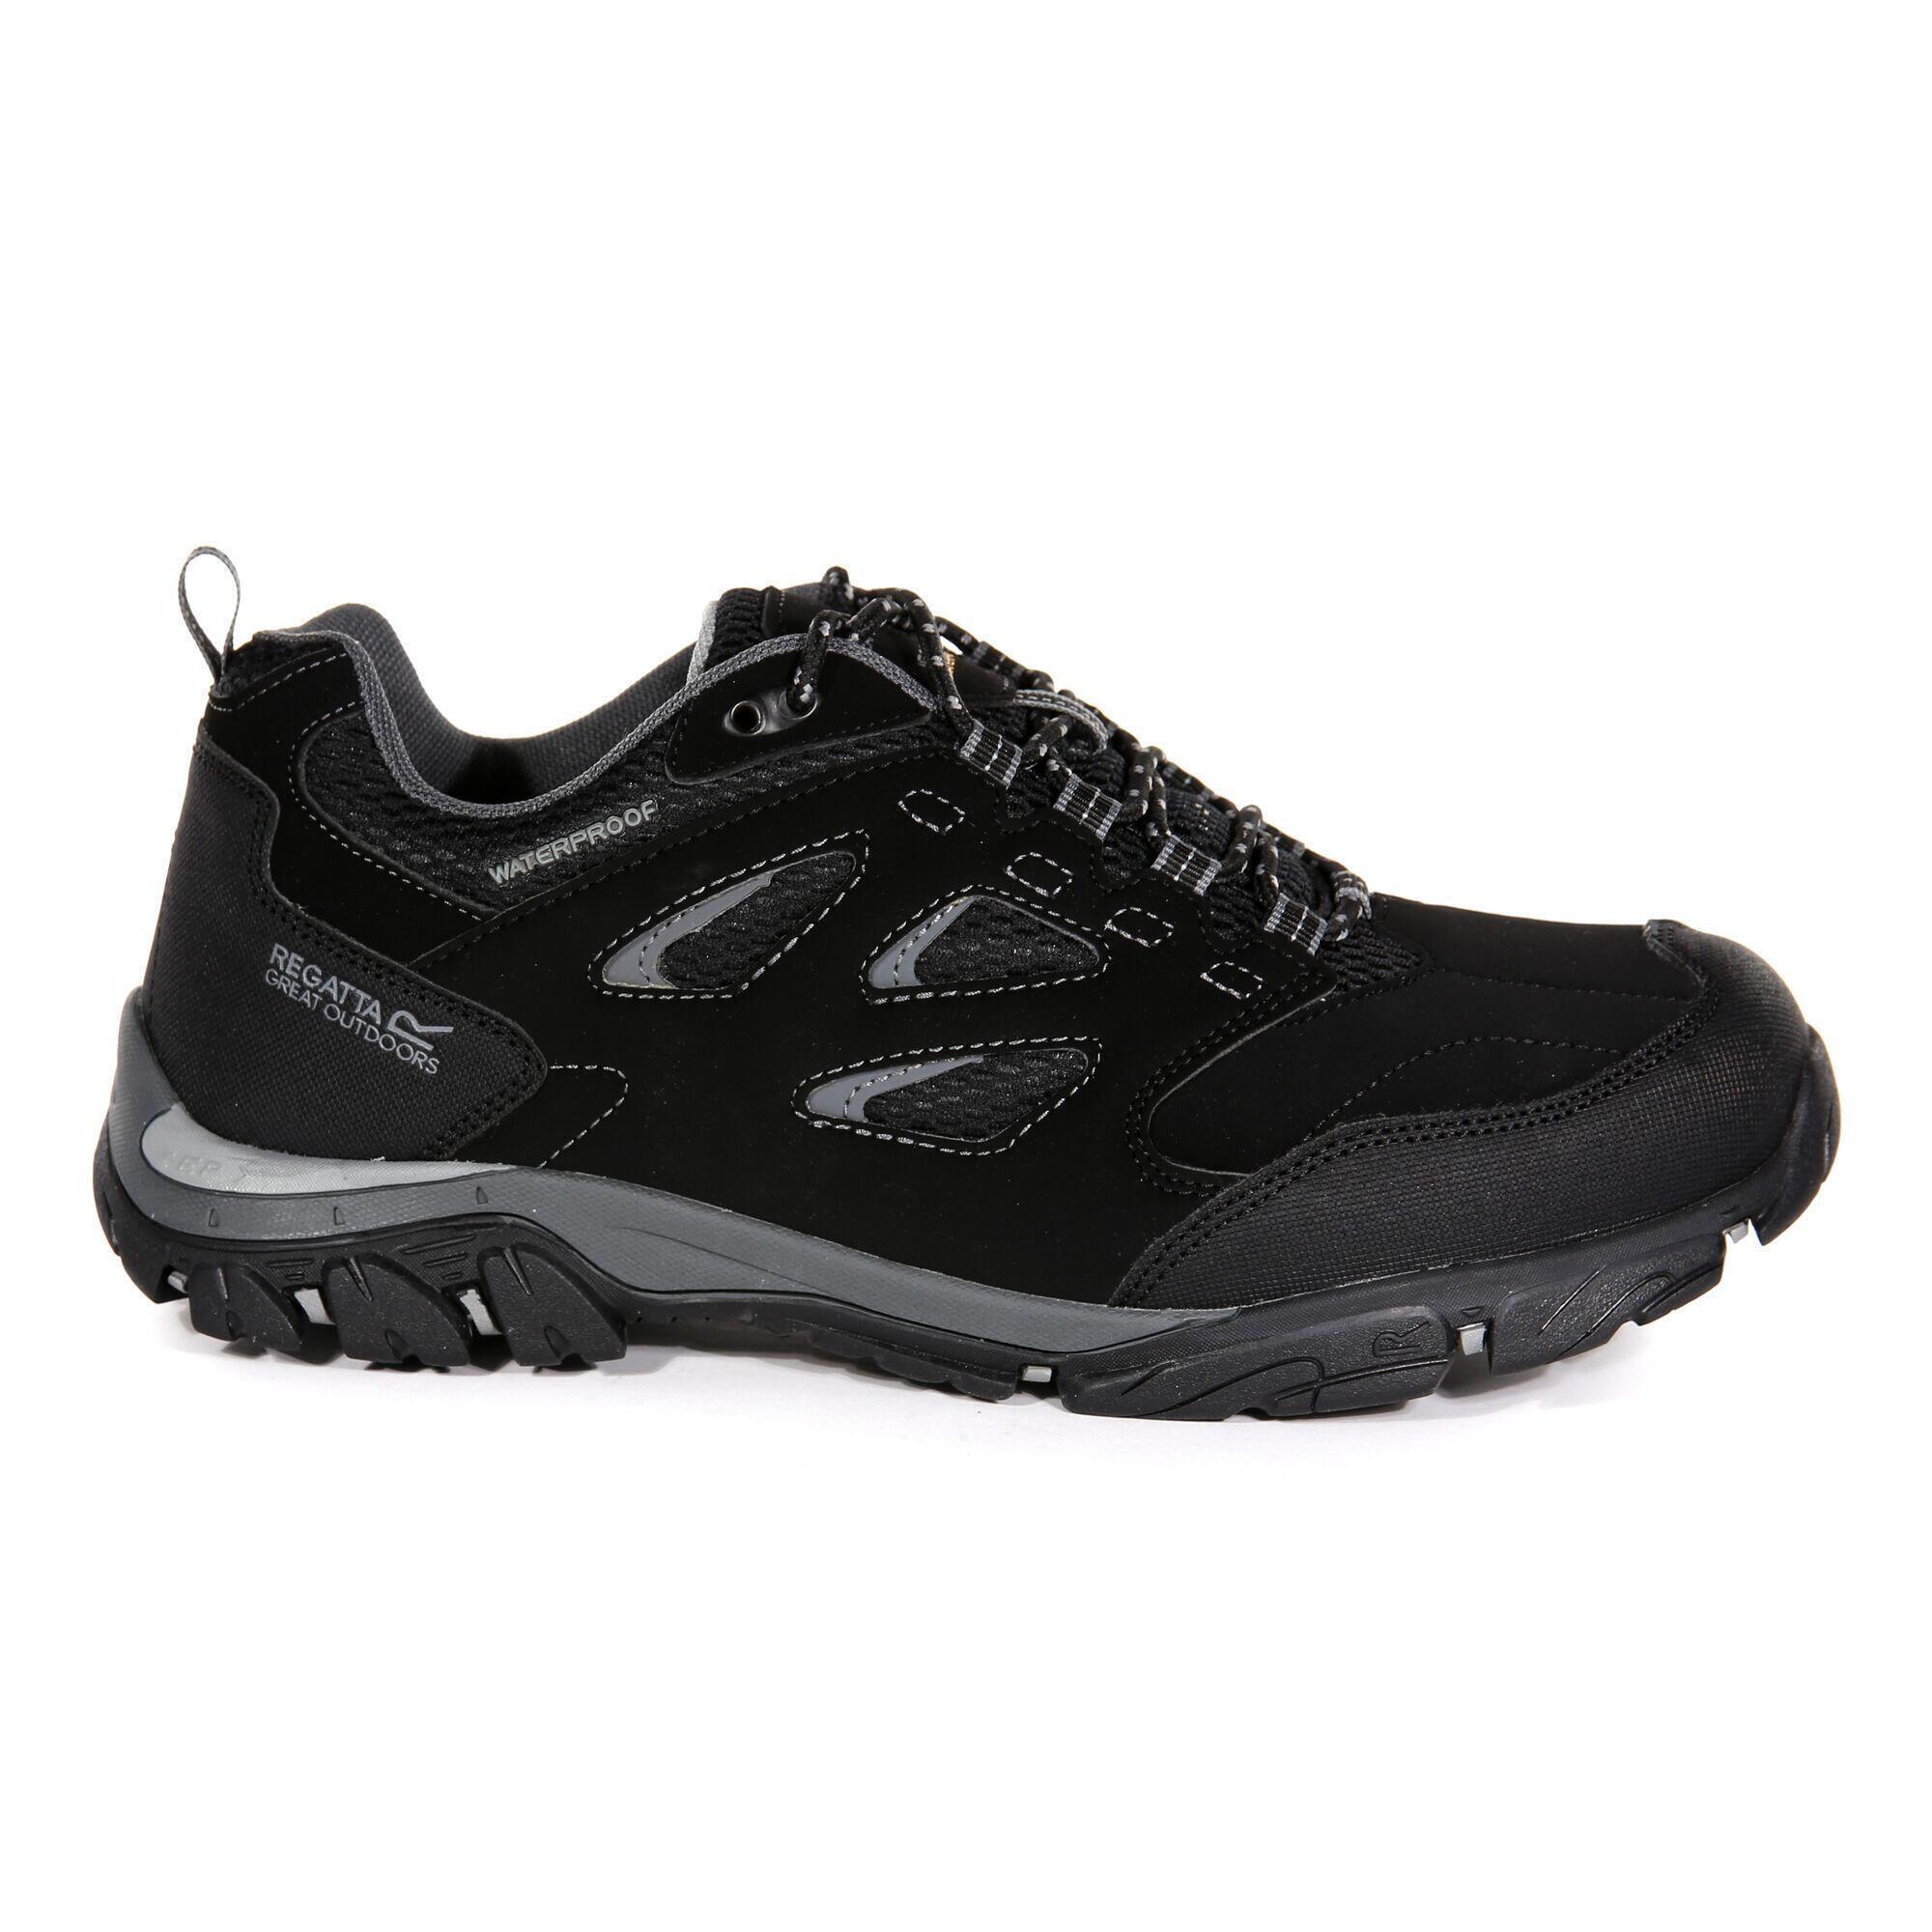 Holcombe IEP Low Men's Hiking Boots - Black Granite 1/5